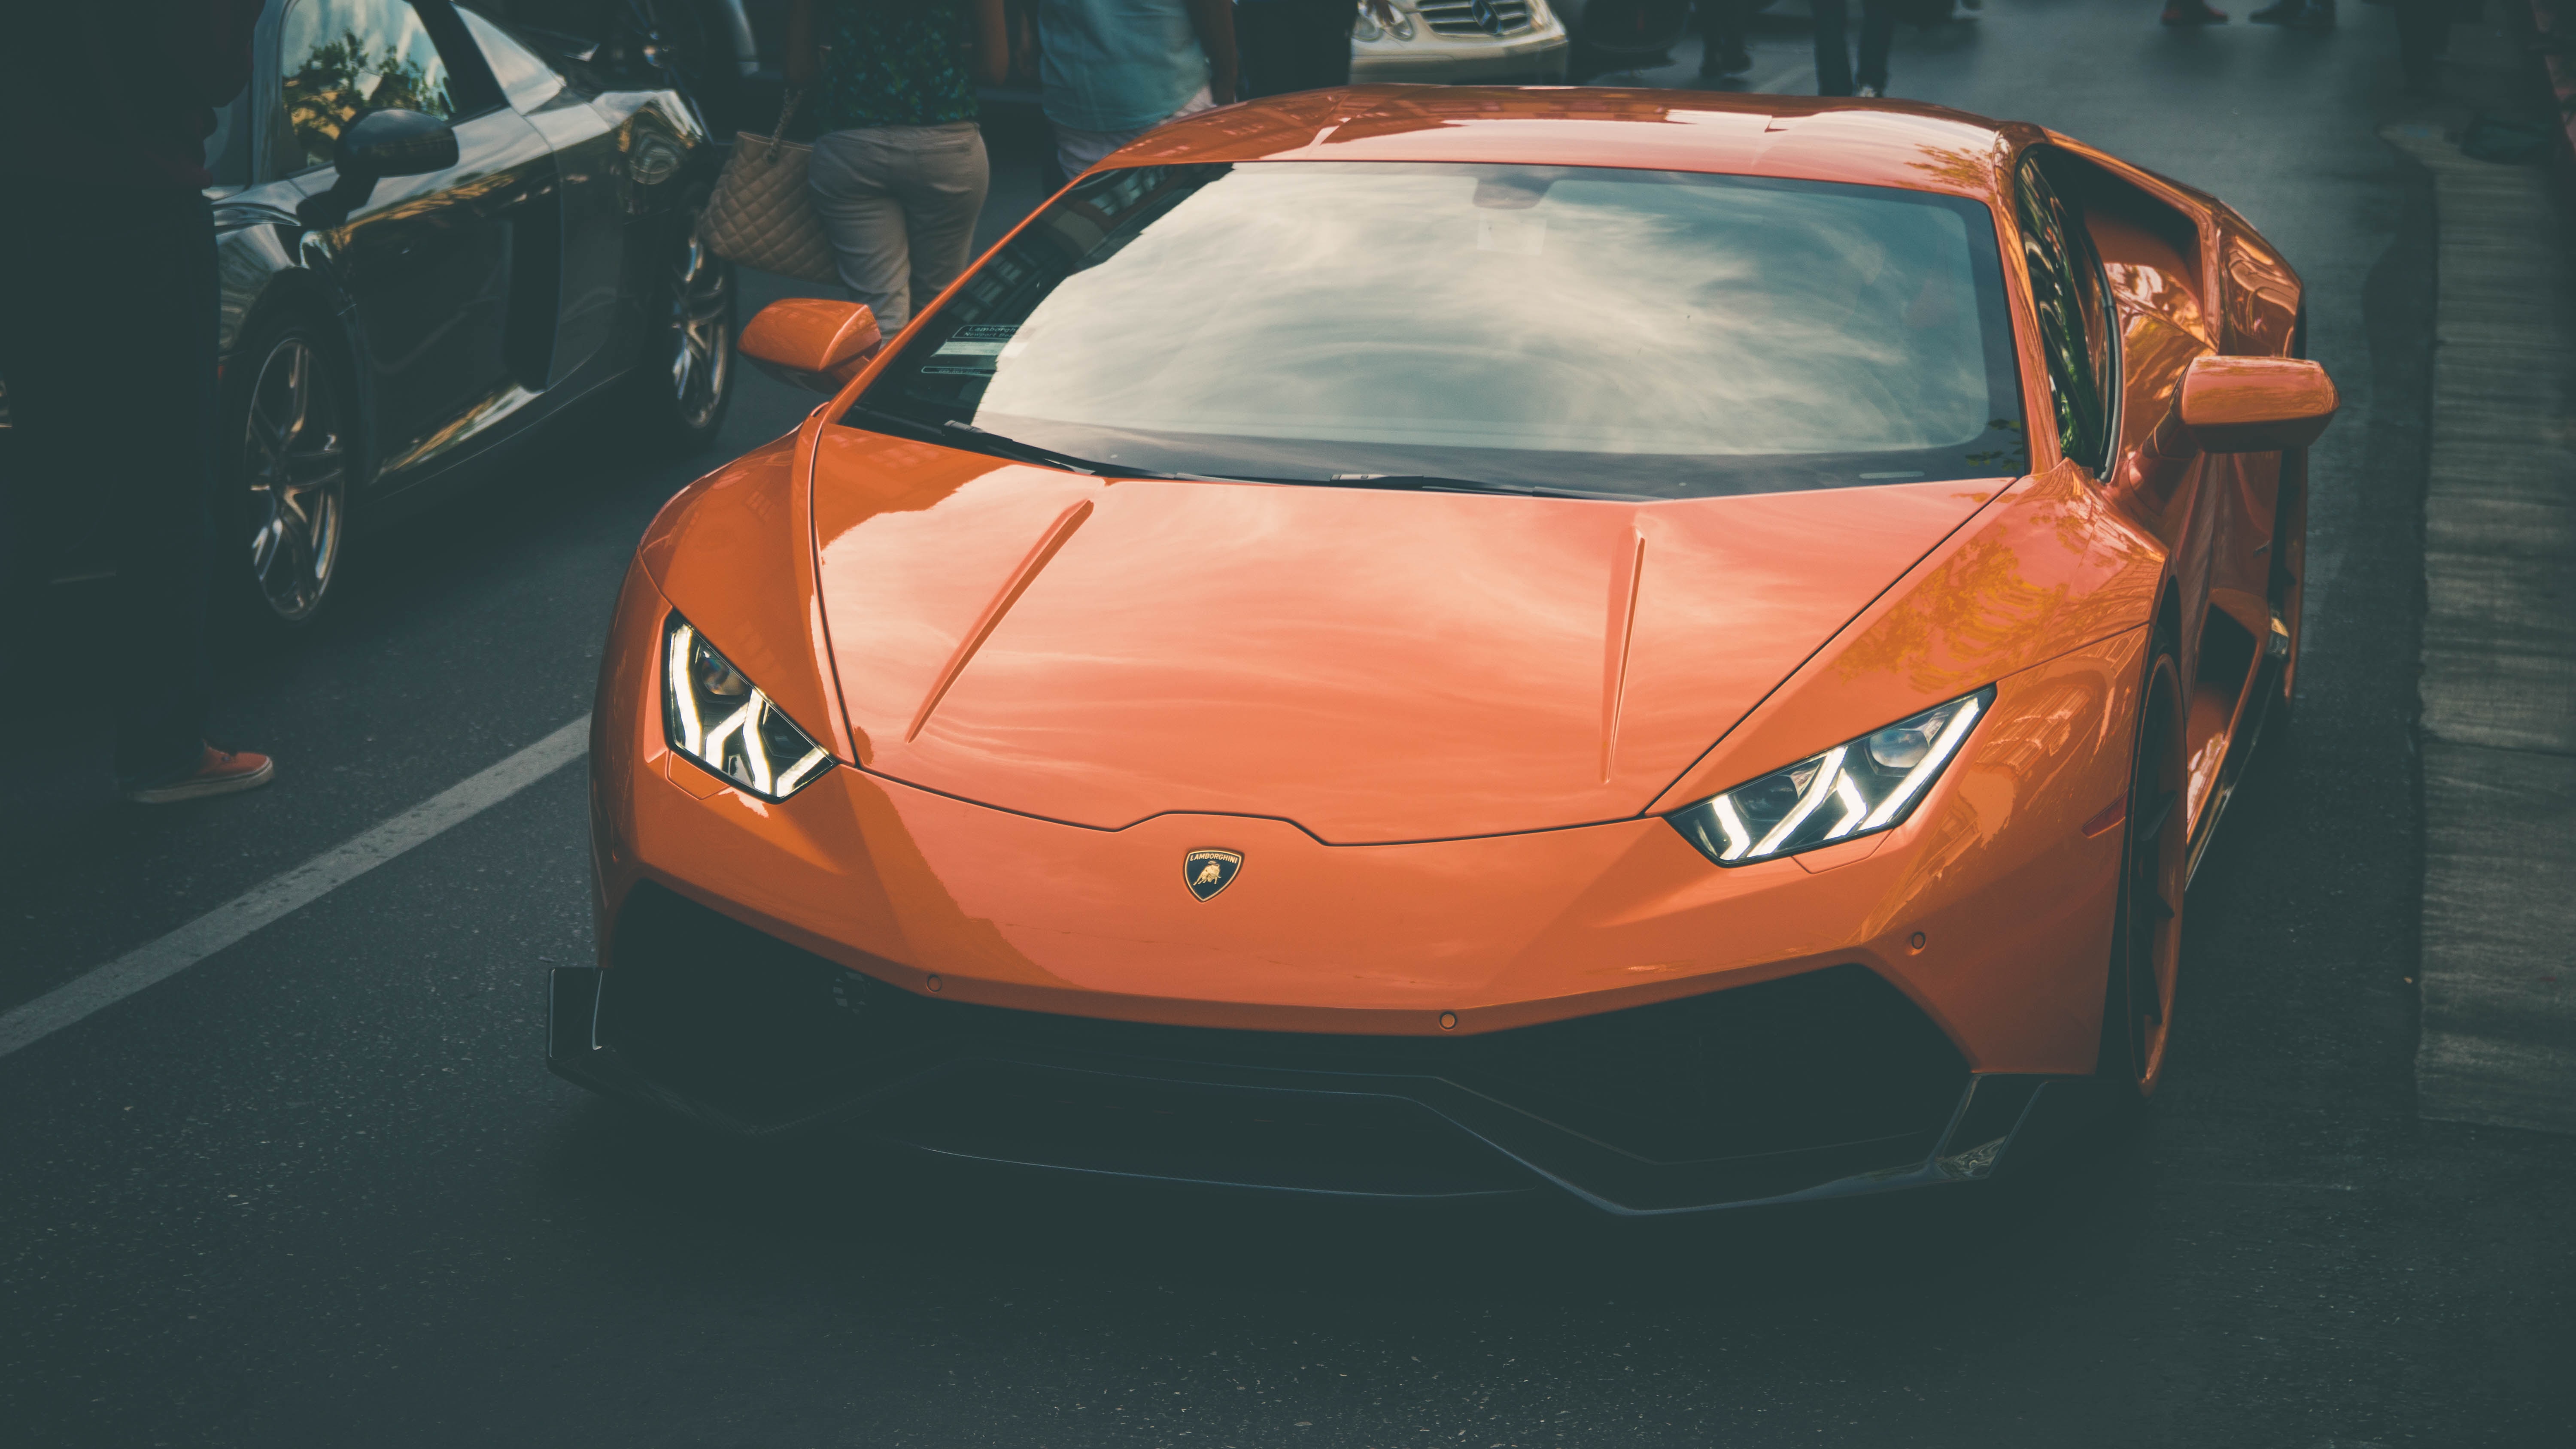 Photo of an orange Lamborghini Gallardo sports car